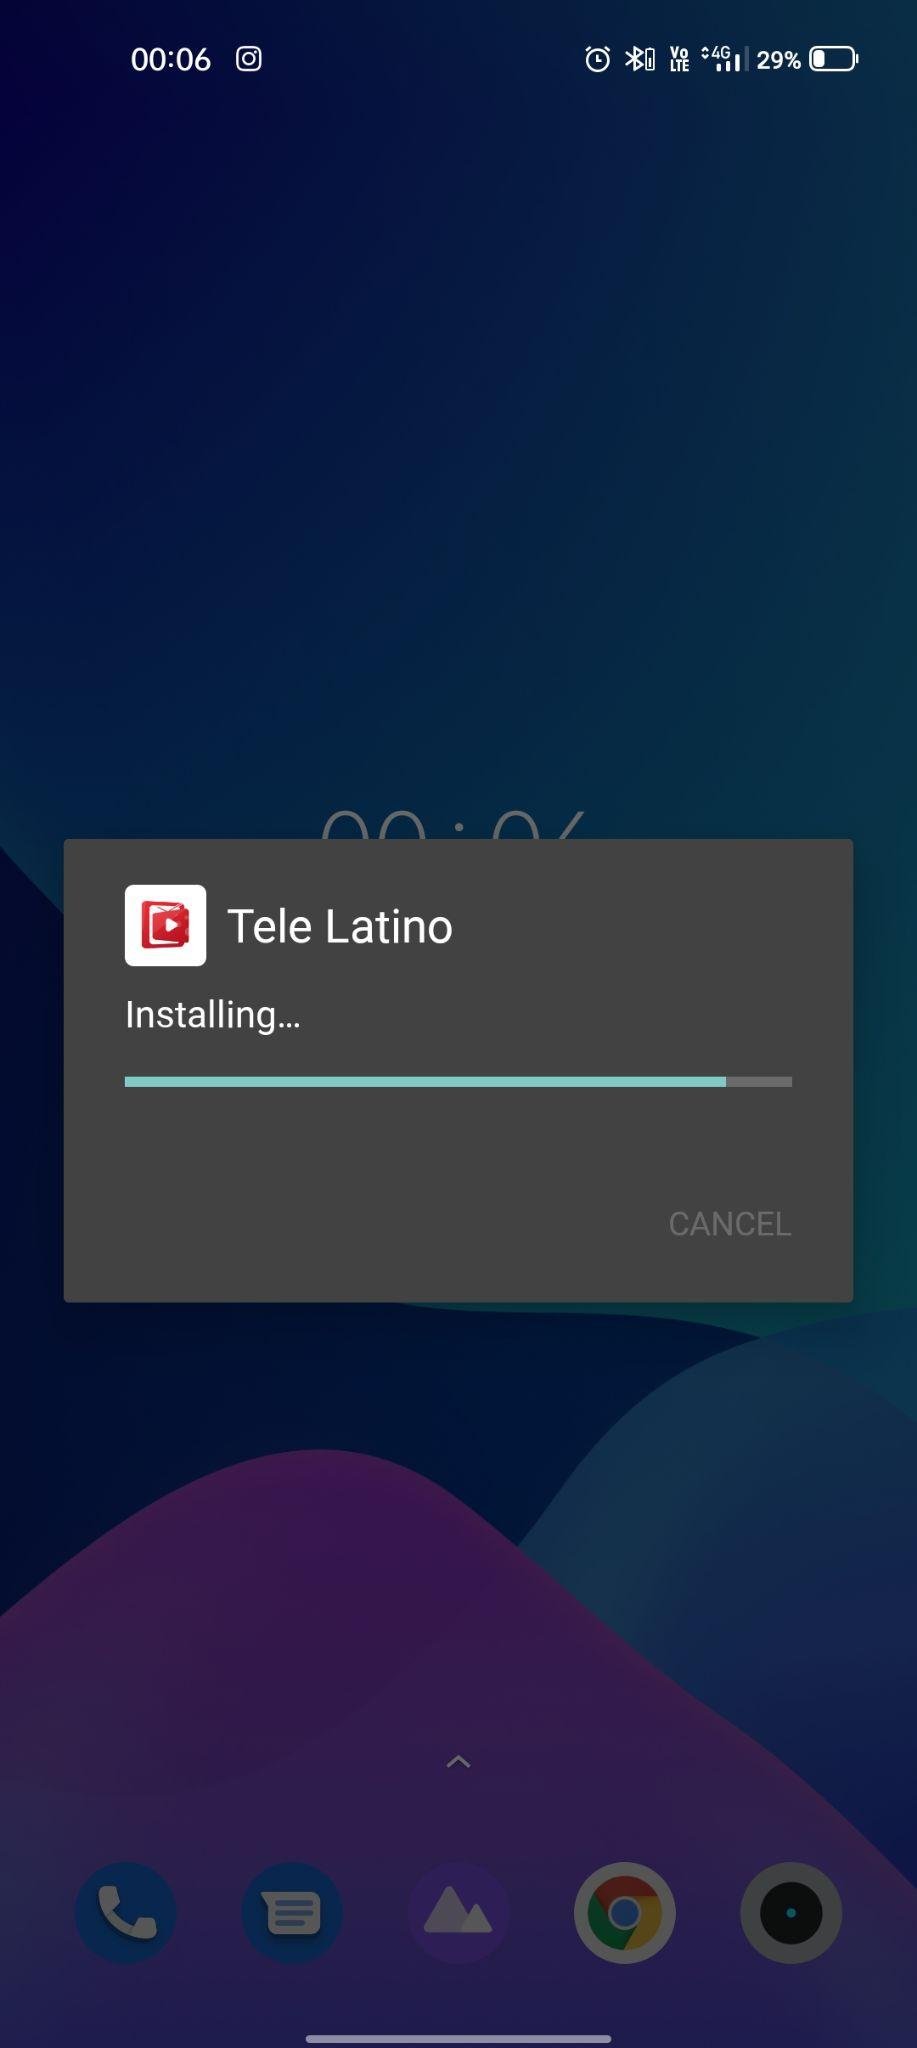 tele latino apk installing